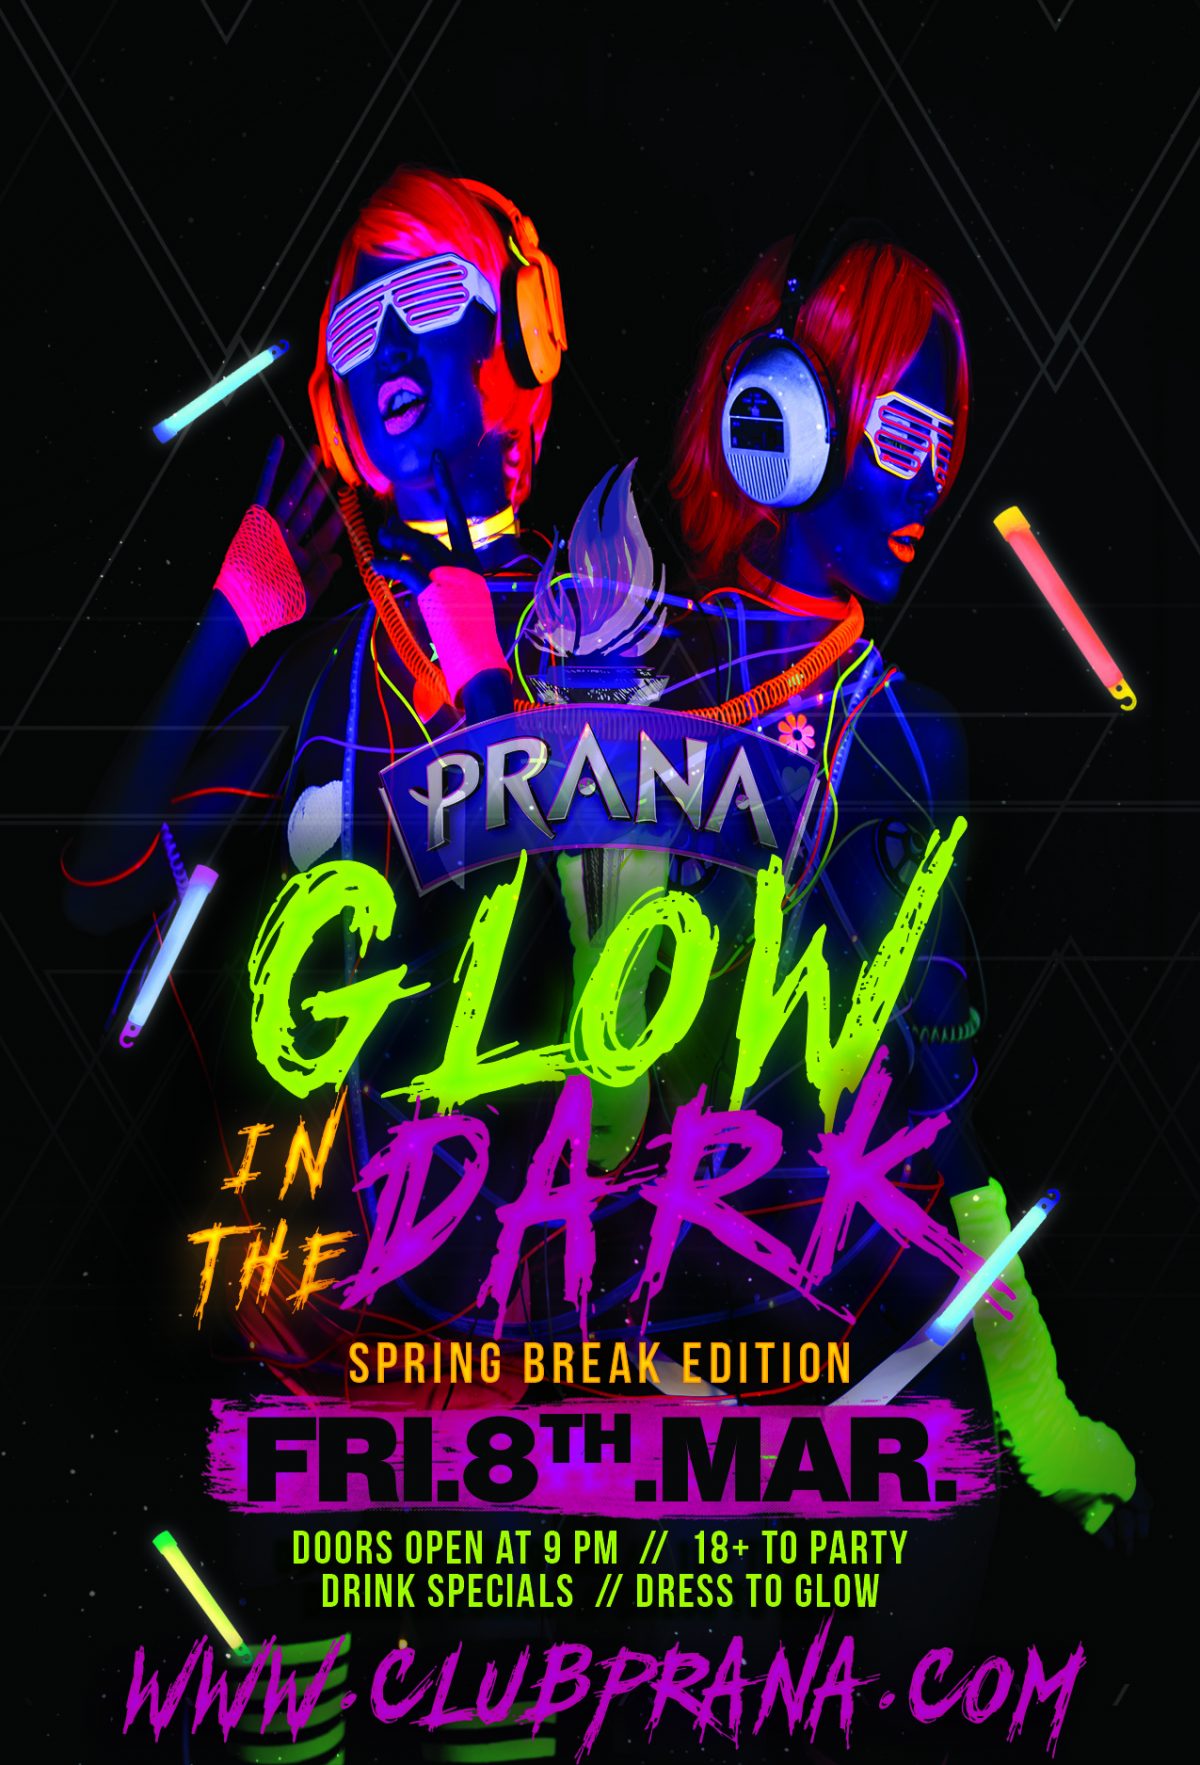 Glow In The Dark Spring Break Edition